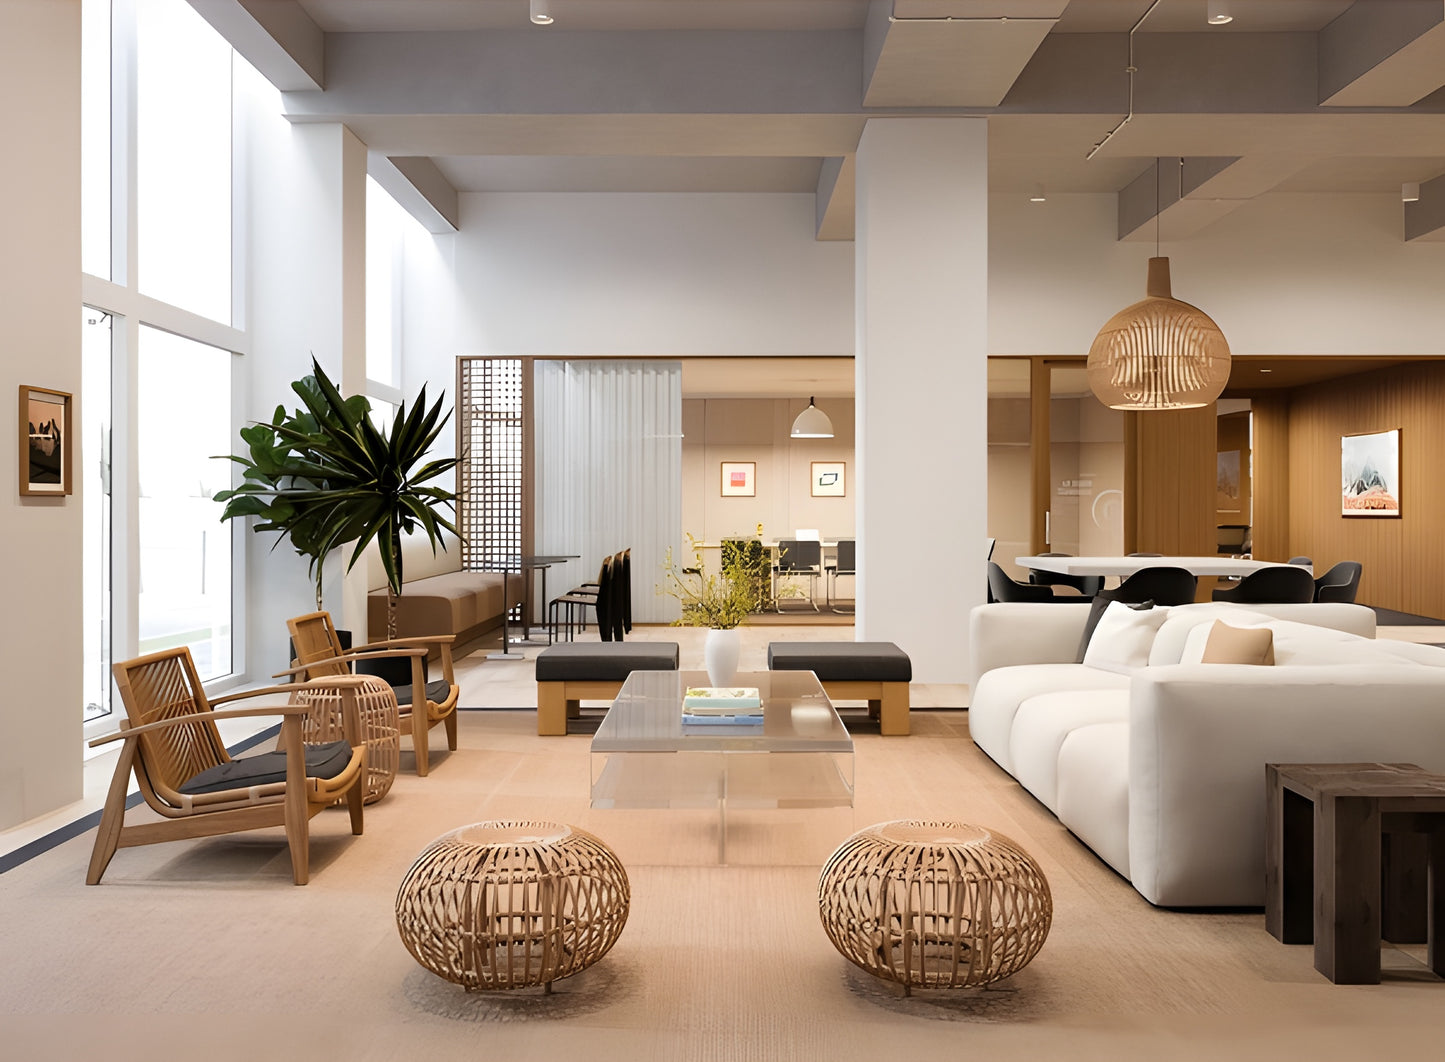 2 Rinjani Teak & Rattan Armchairs in living room setting by Mellowdays Furniture